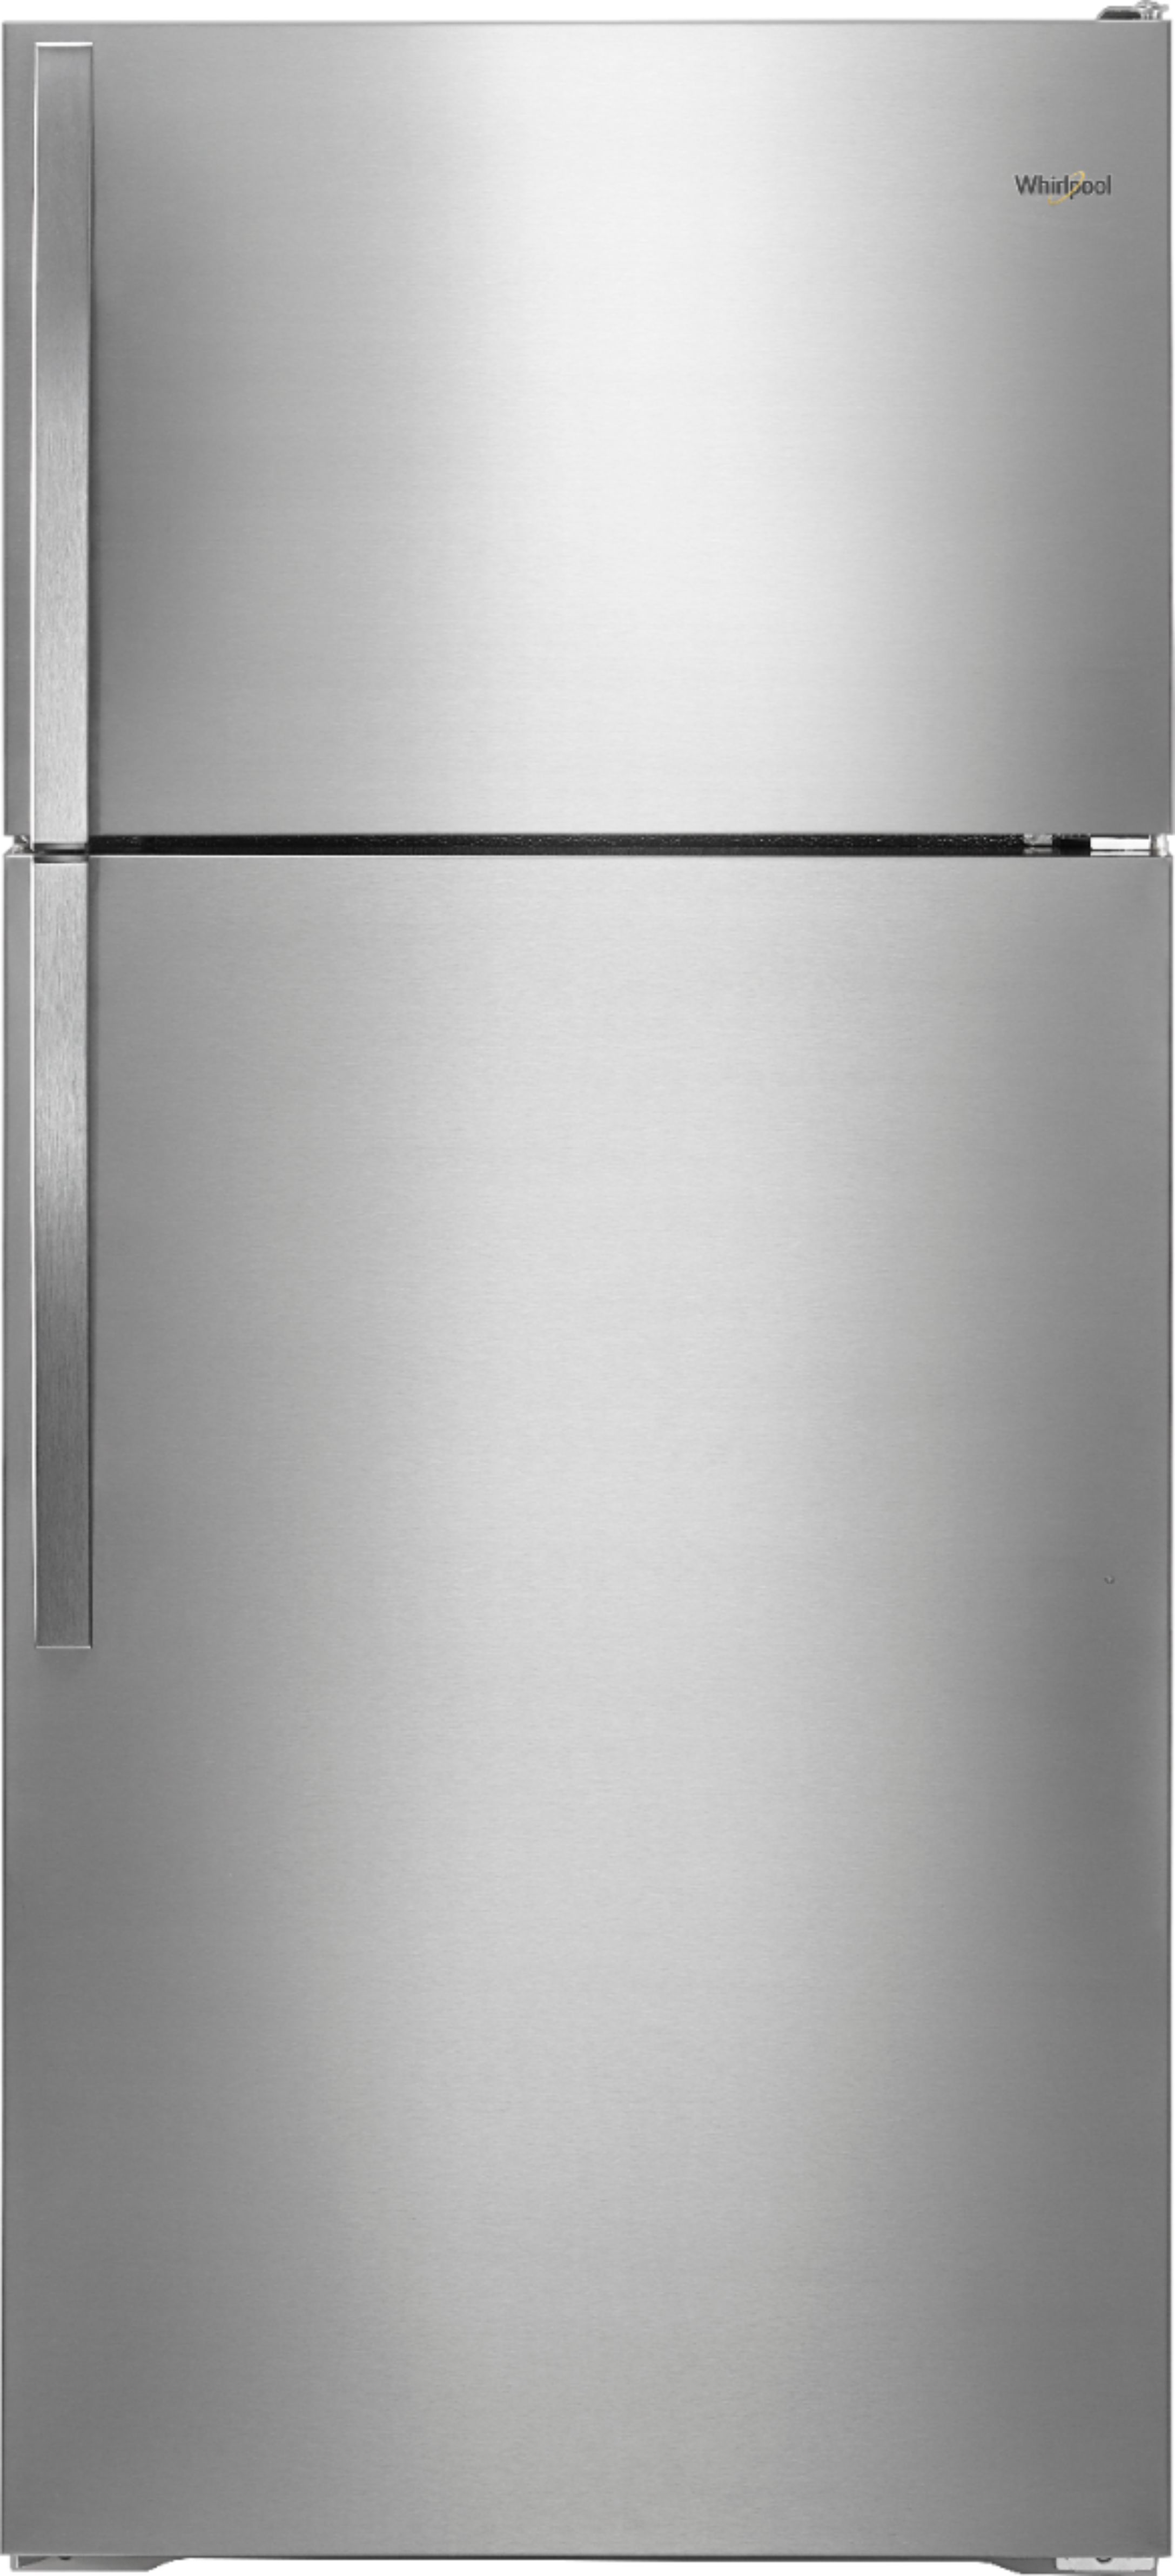 Whirlpool 14.3 Cu. Ft. Top-Freezer Refrigerator Monochromatic Stainless ...